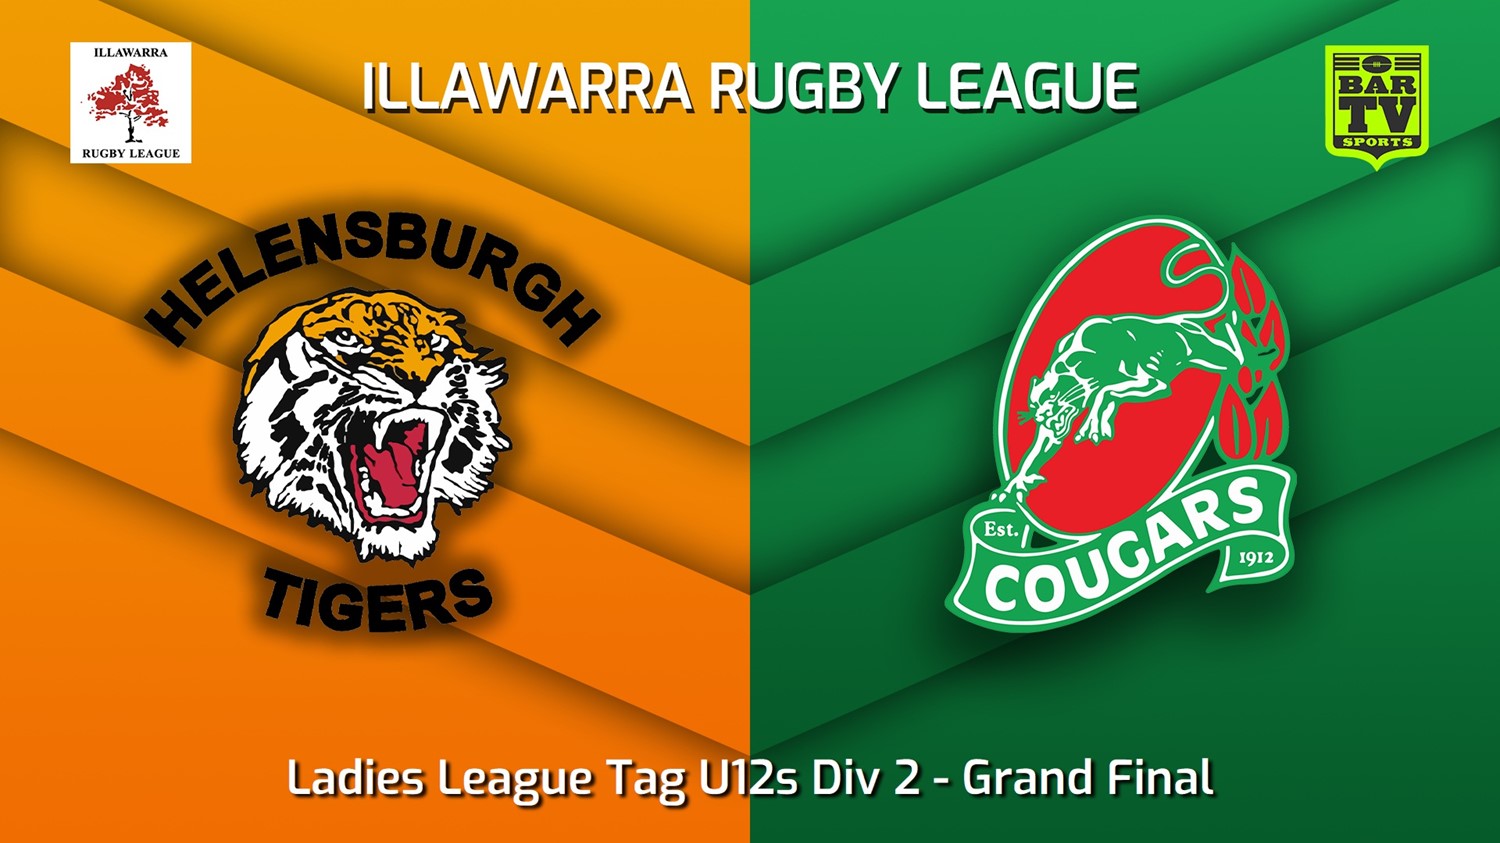 220819-Illawarra Grand Final - Ladies League Tag U12s Div 2 - Helensburgh Tigers v Corrimal Cougars Slate Image